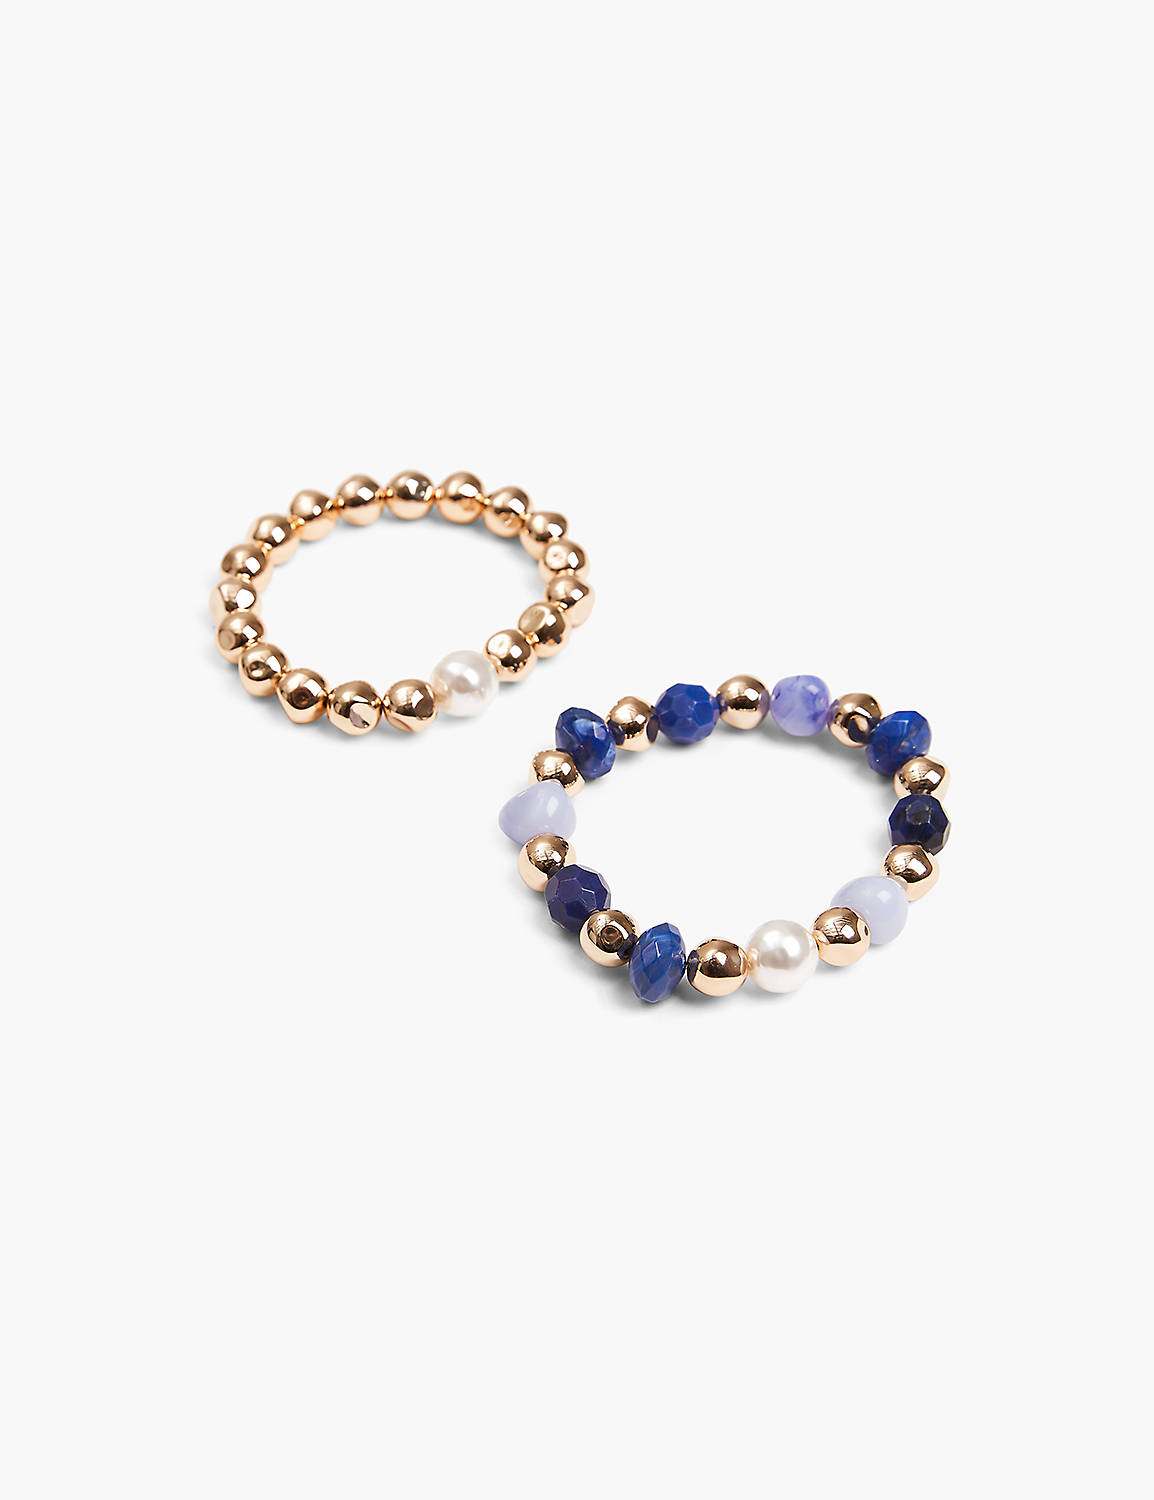 Blue Stone & Pearl Stretch Braceler Product Image 1